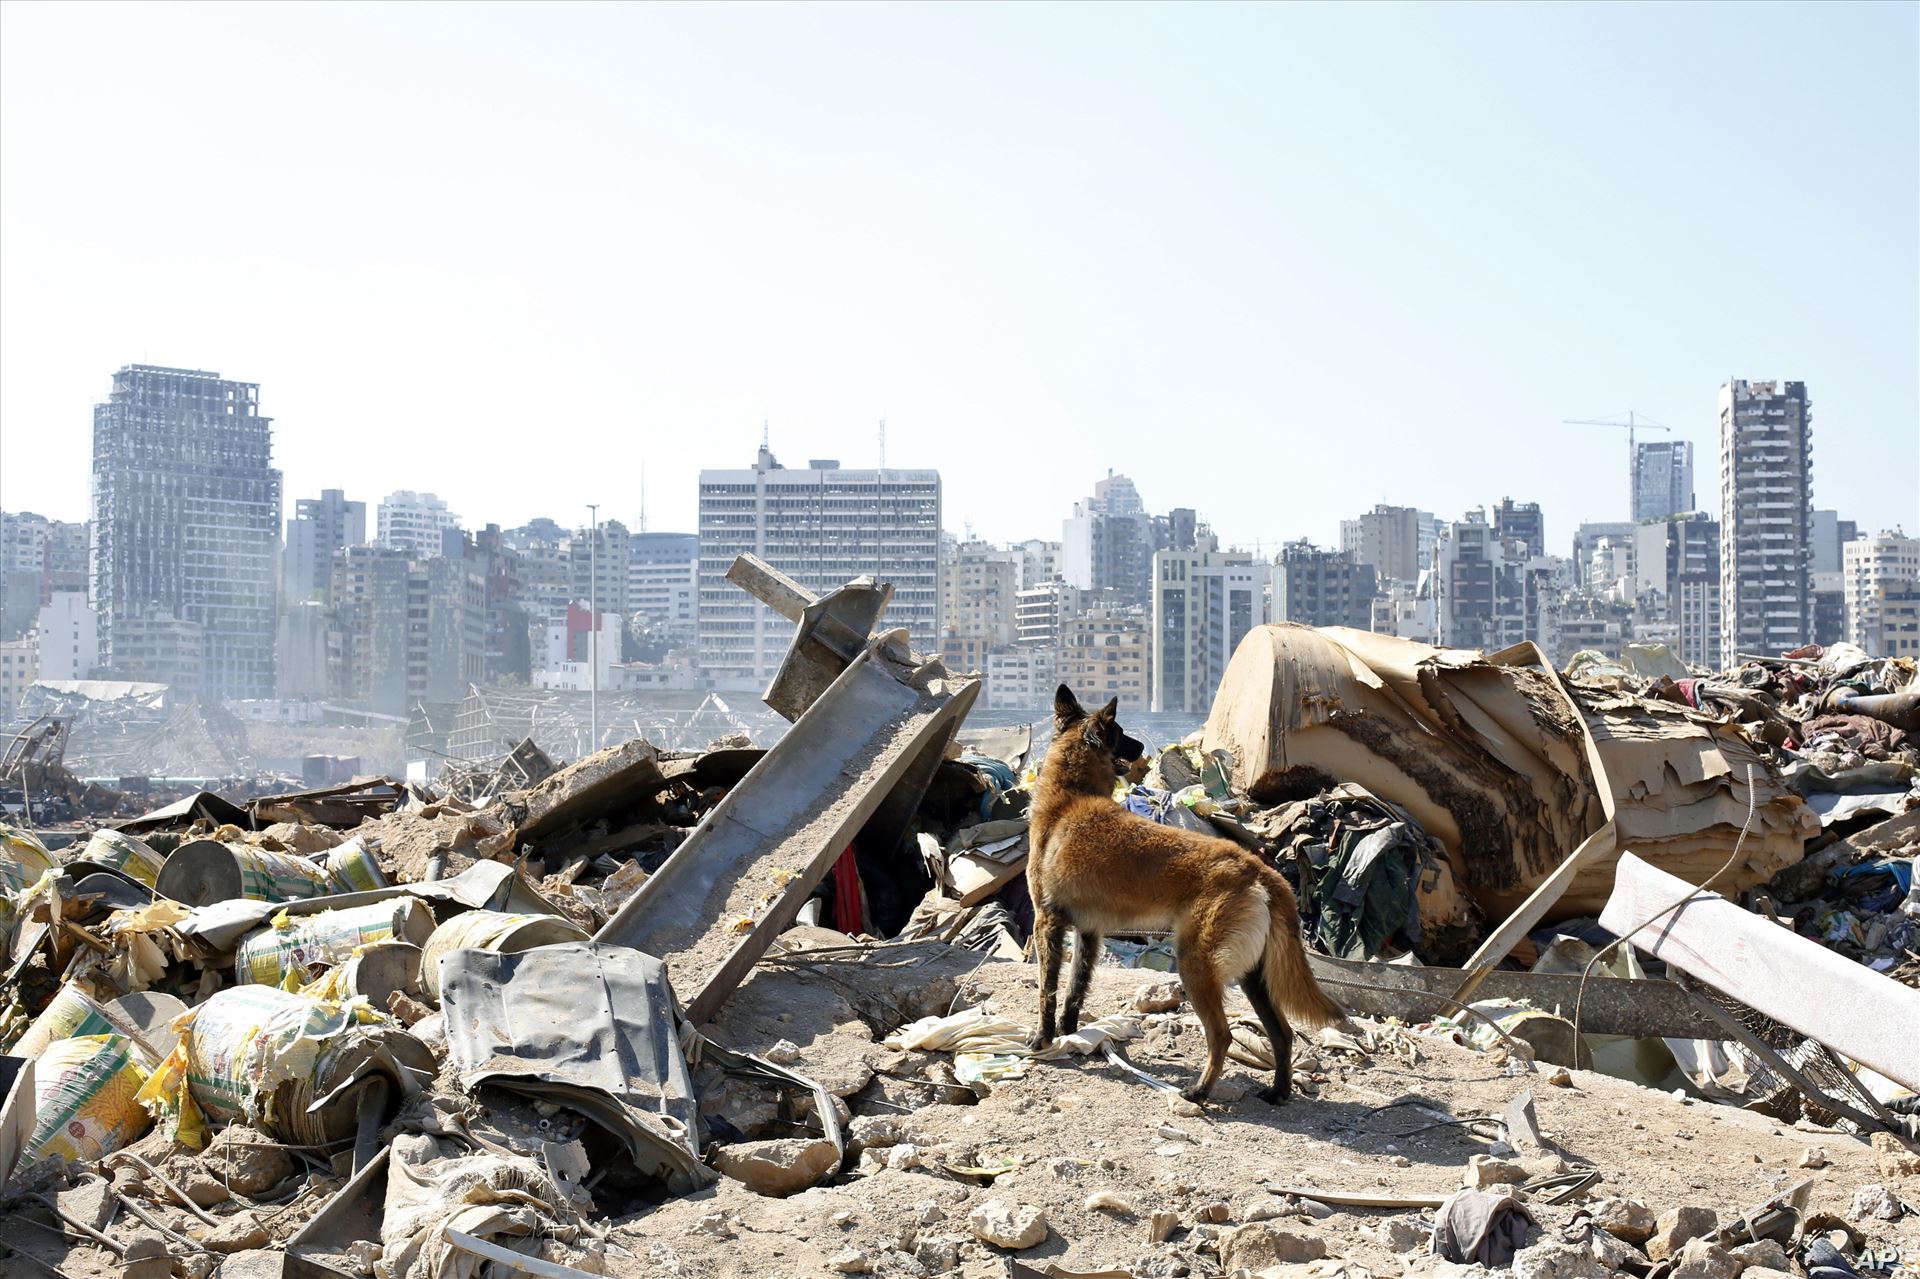 APTOPIX Lebanon Explosion - عکس روز: از تخریب انفجار بیروت تا صف طولانی مسافران در فرودگاه‌ها
آلبوم عکس - جمعه ۱۷ مرداد ۱۳۹۹
۱۷ مرداد ۱۳۹۹ by mohsen dehbashi